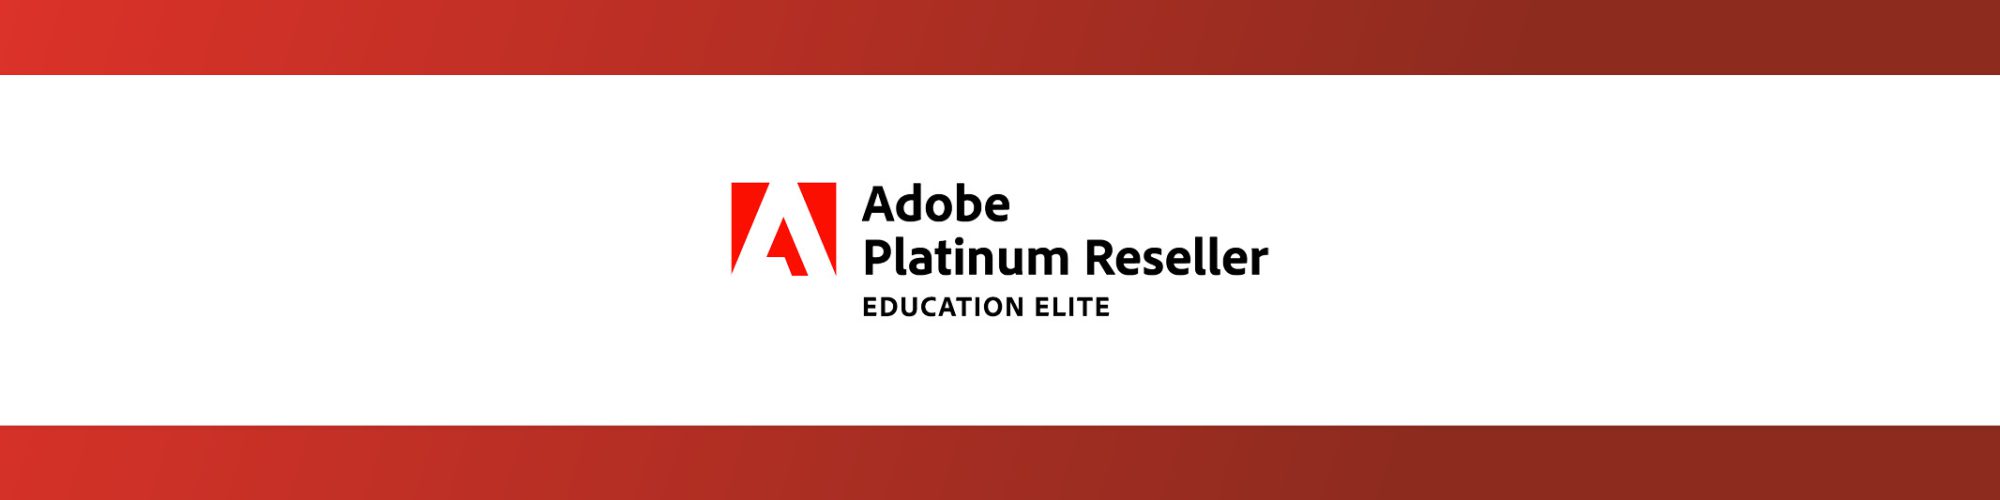 It’s official! We’re an Adobe Education Elite Partner